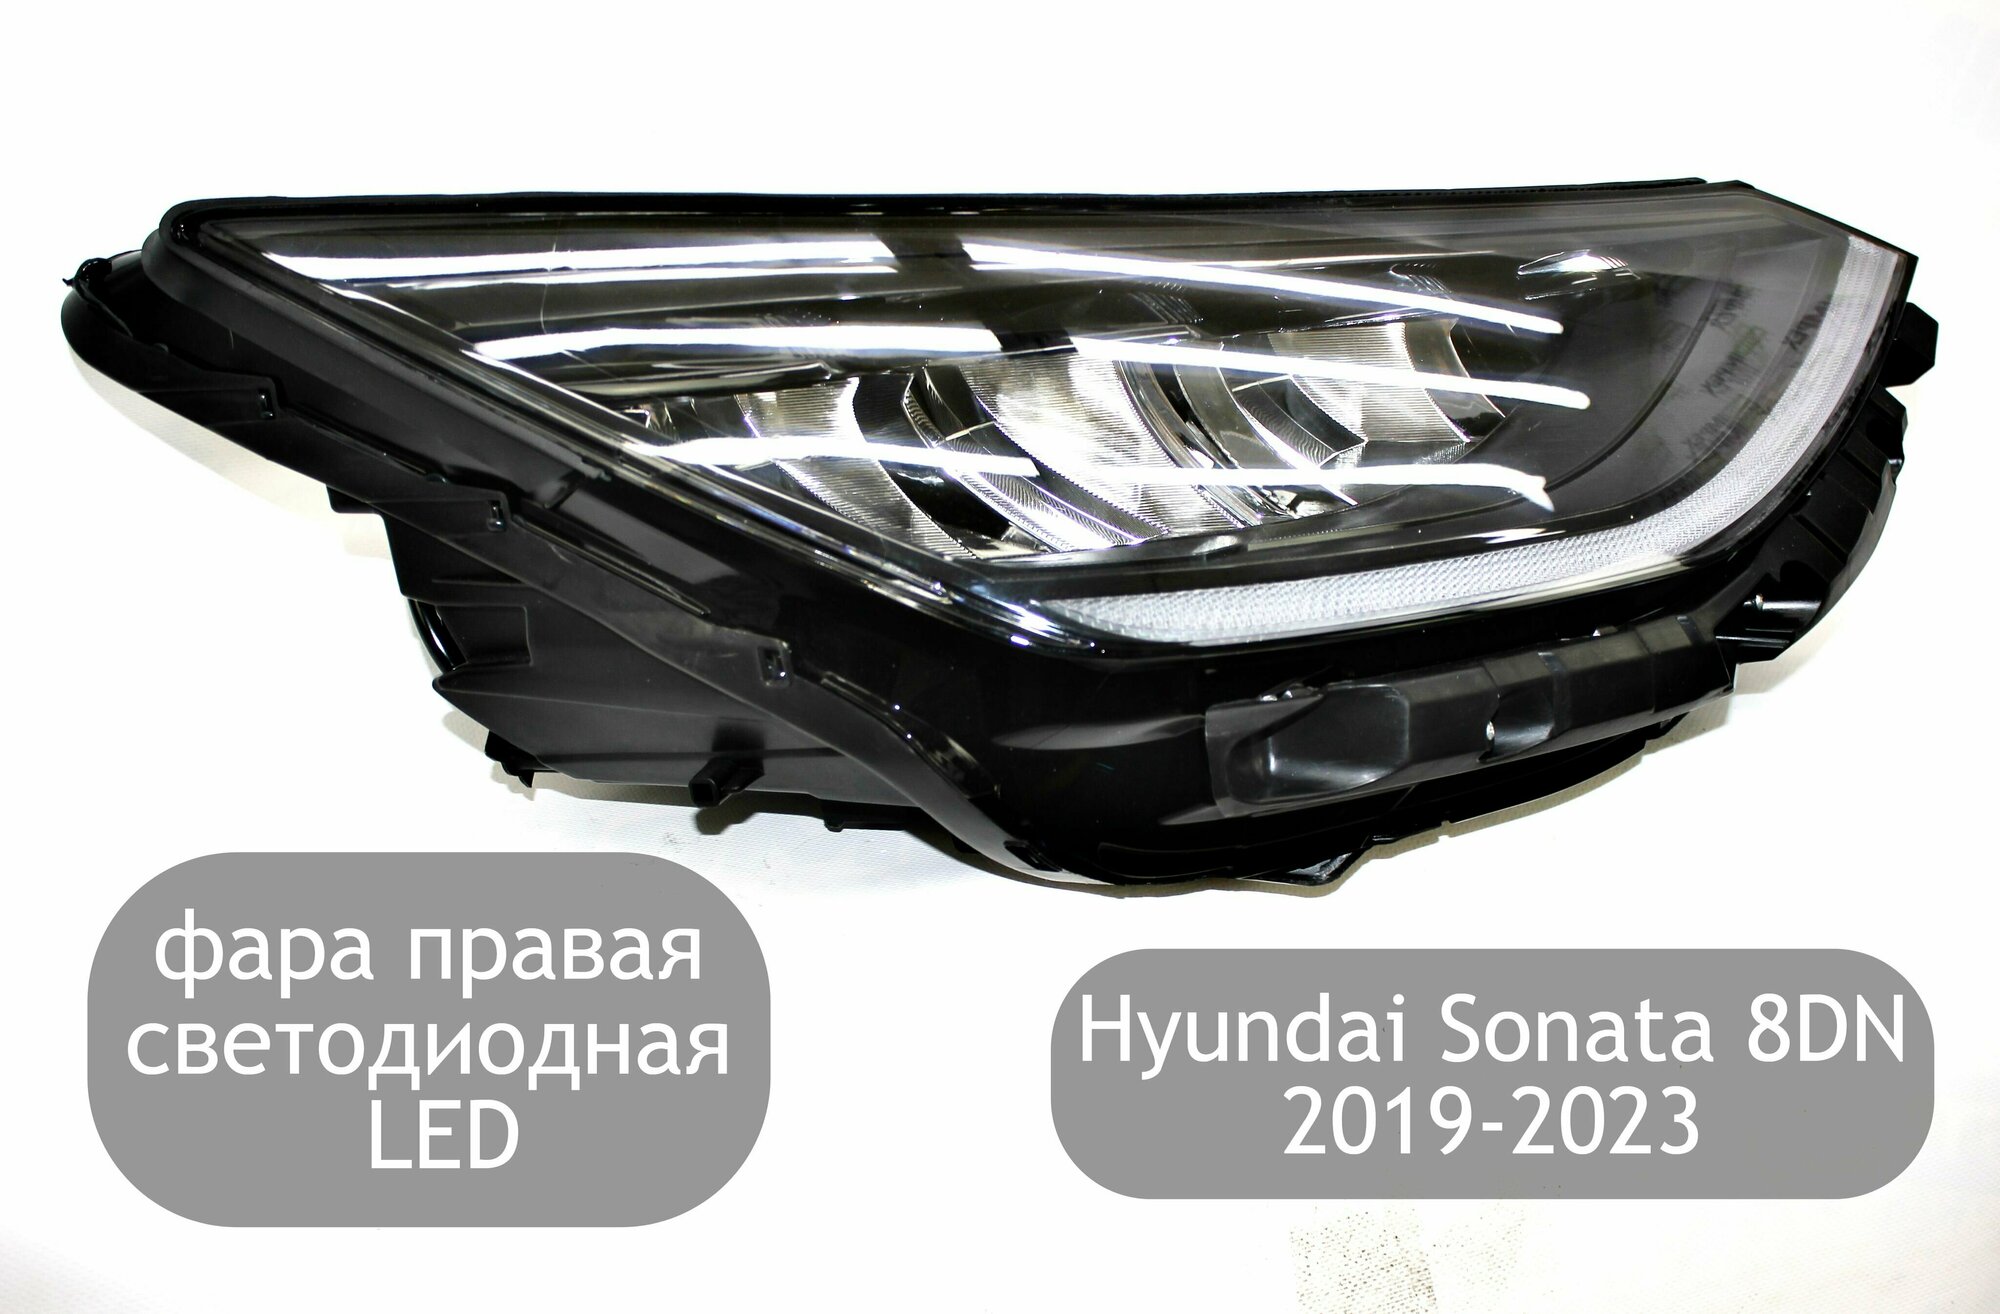 Фара правая светодиодная (LED) для Hyundai Sonata 8 DN 2019-2023